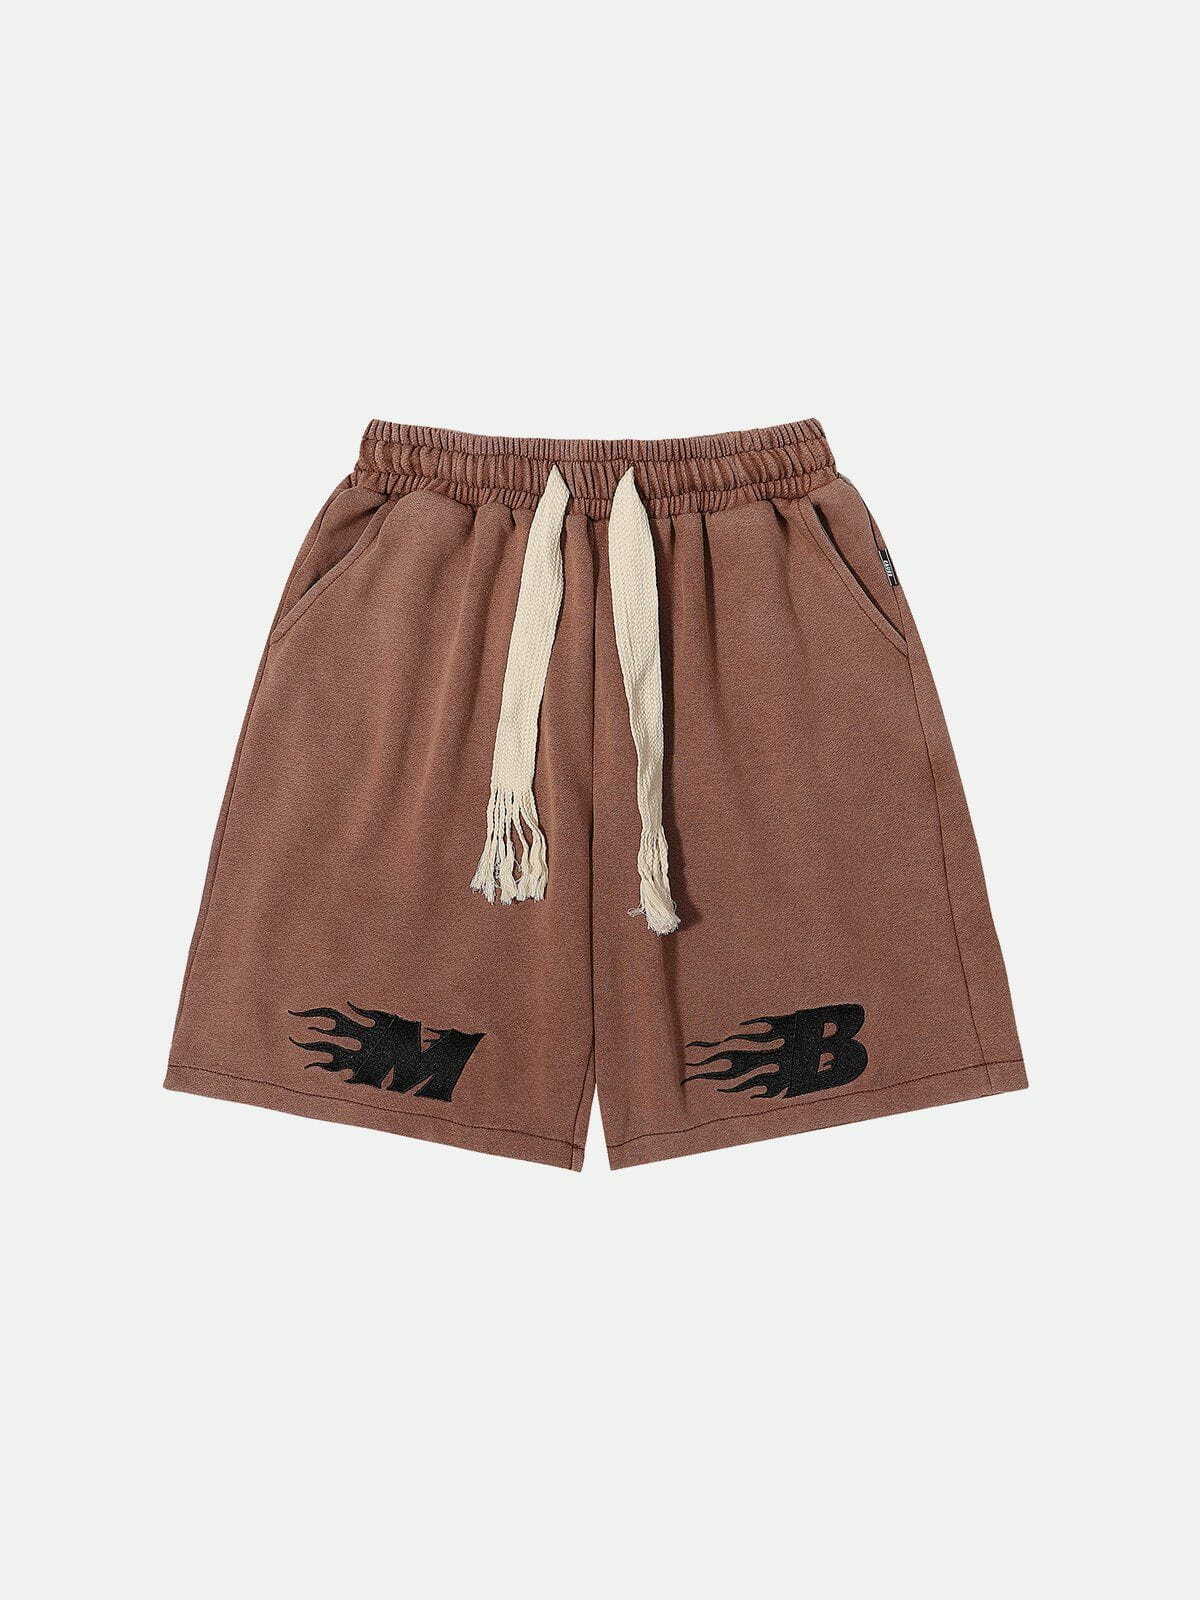 flame print drawstring shorts edgy y2k streetwear 5797